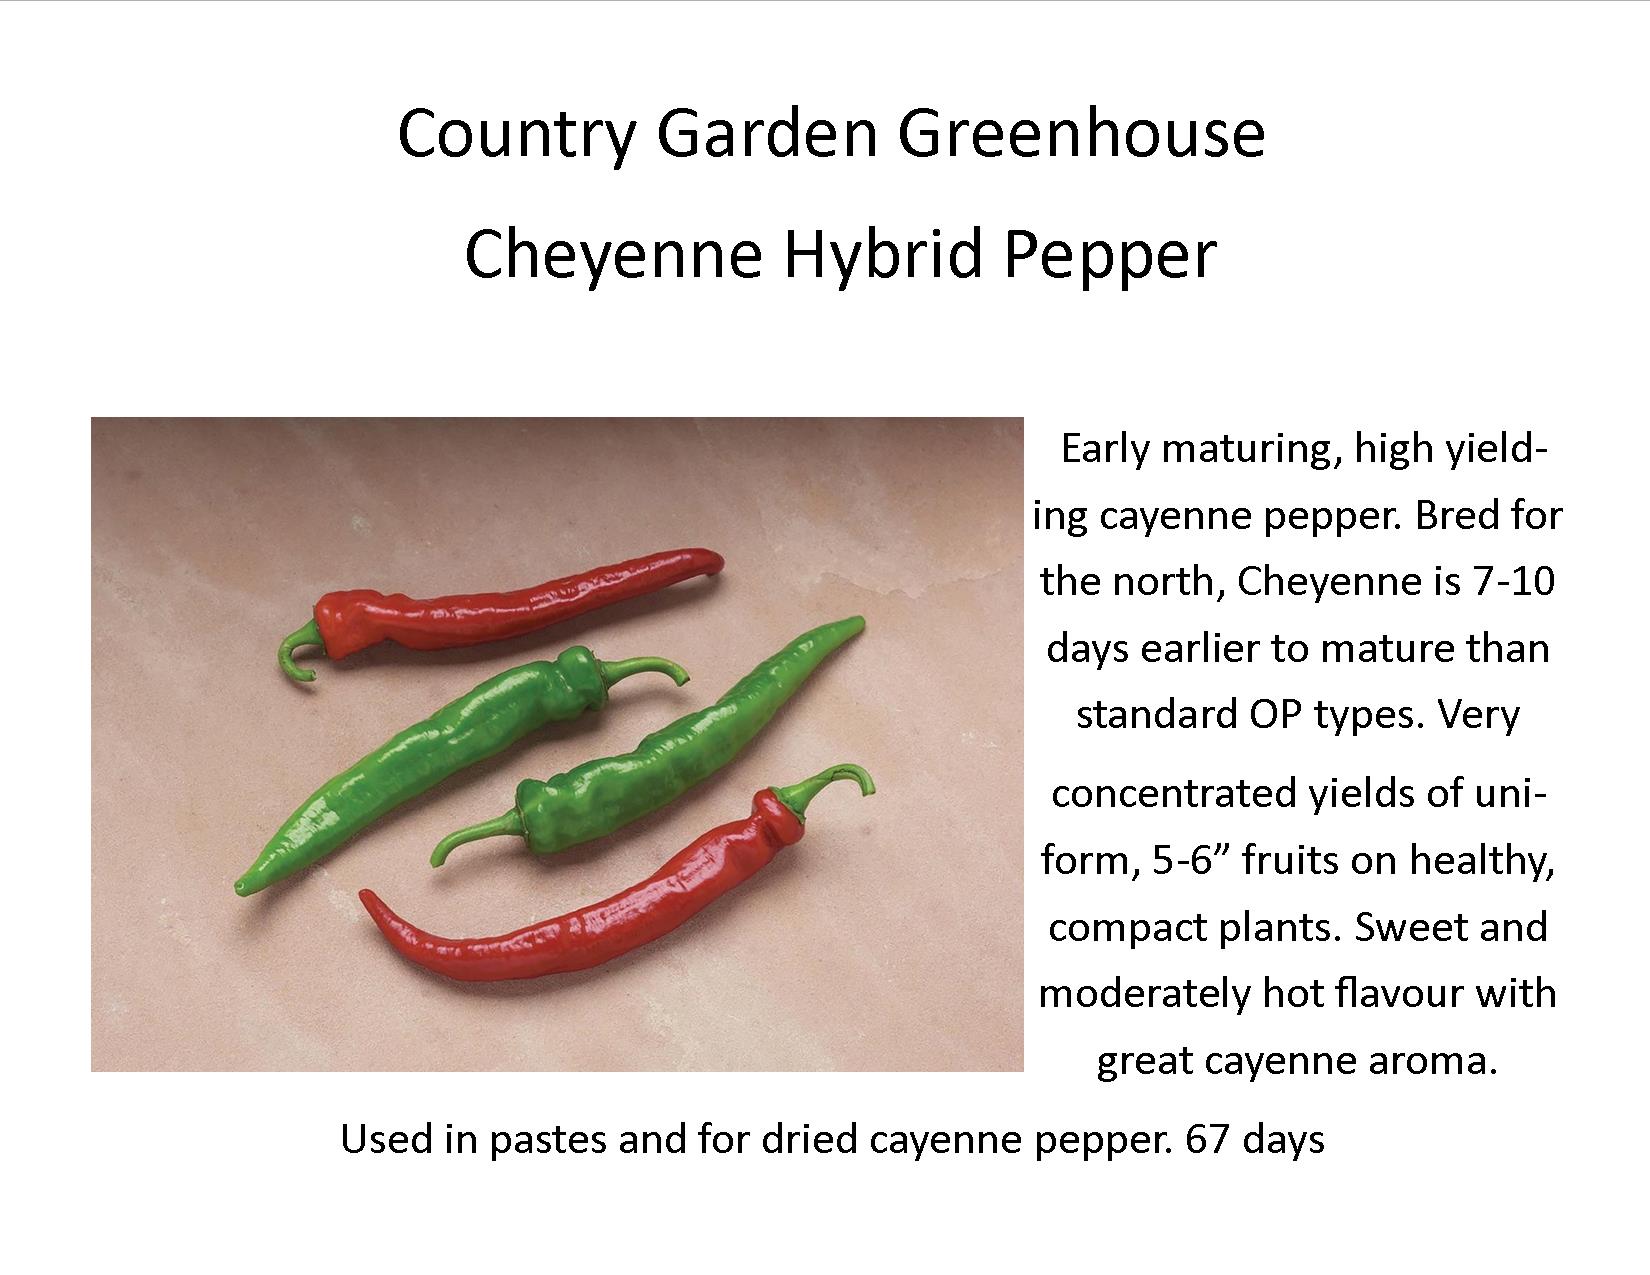 Cheyenne Hybrid Pepper